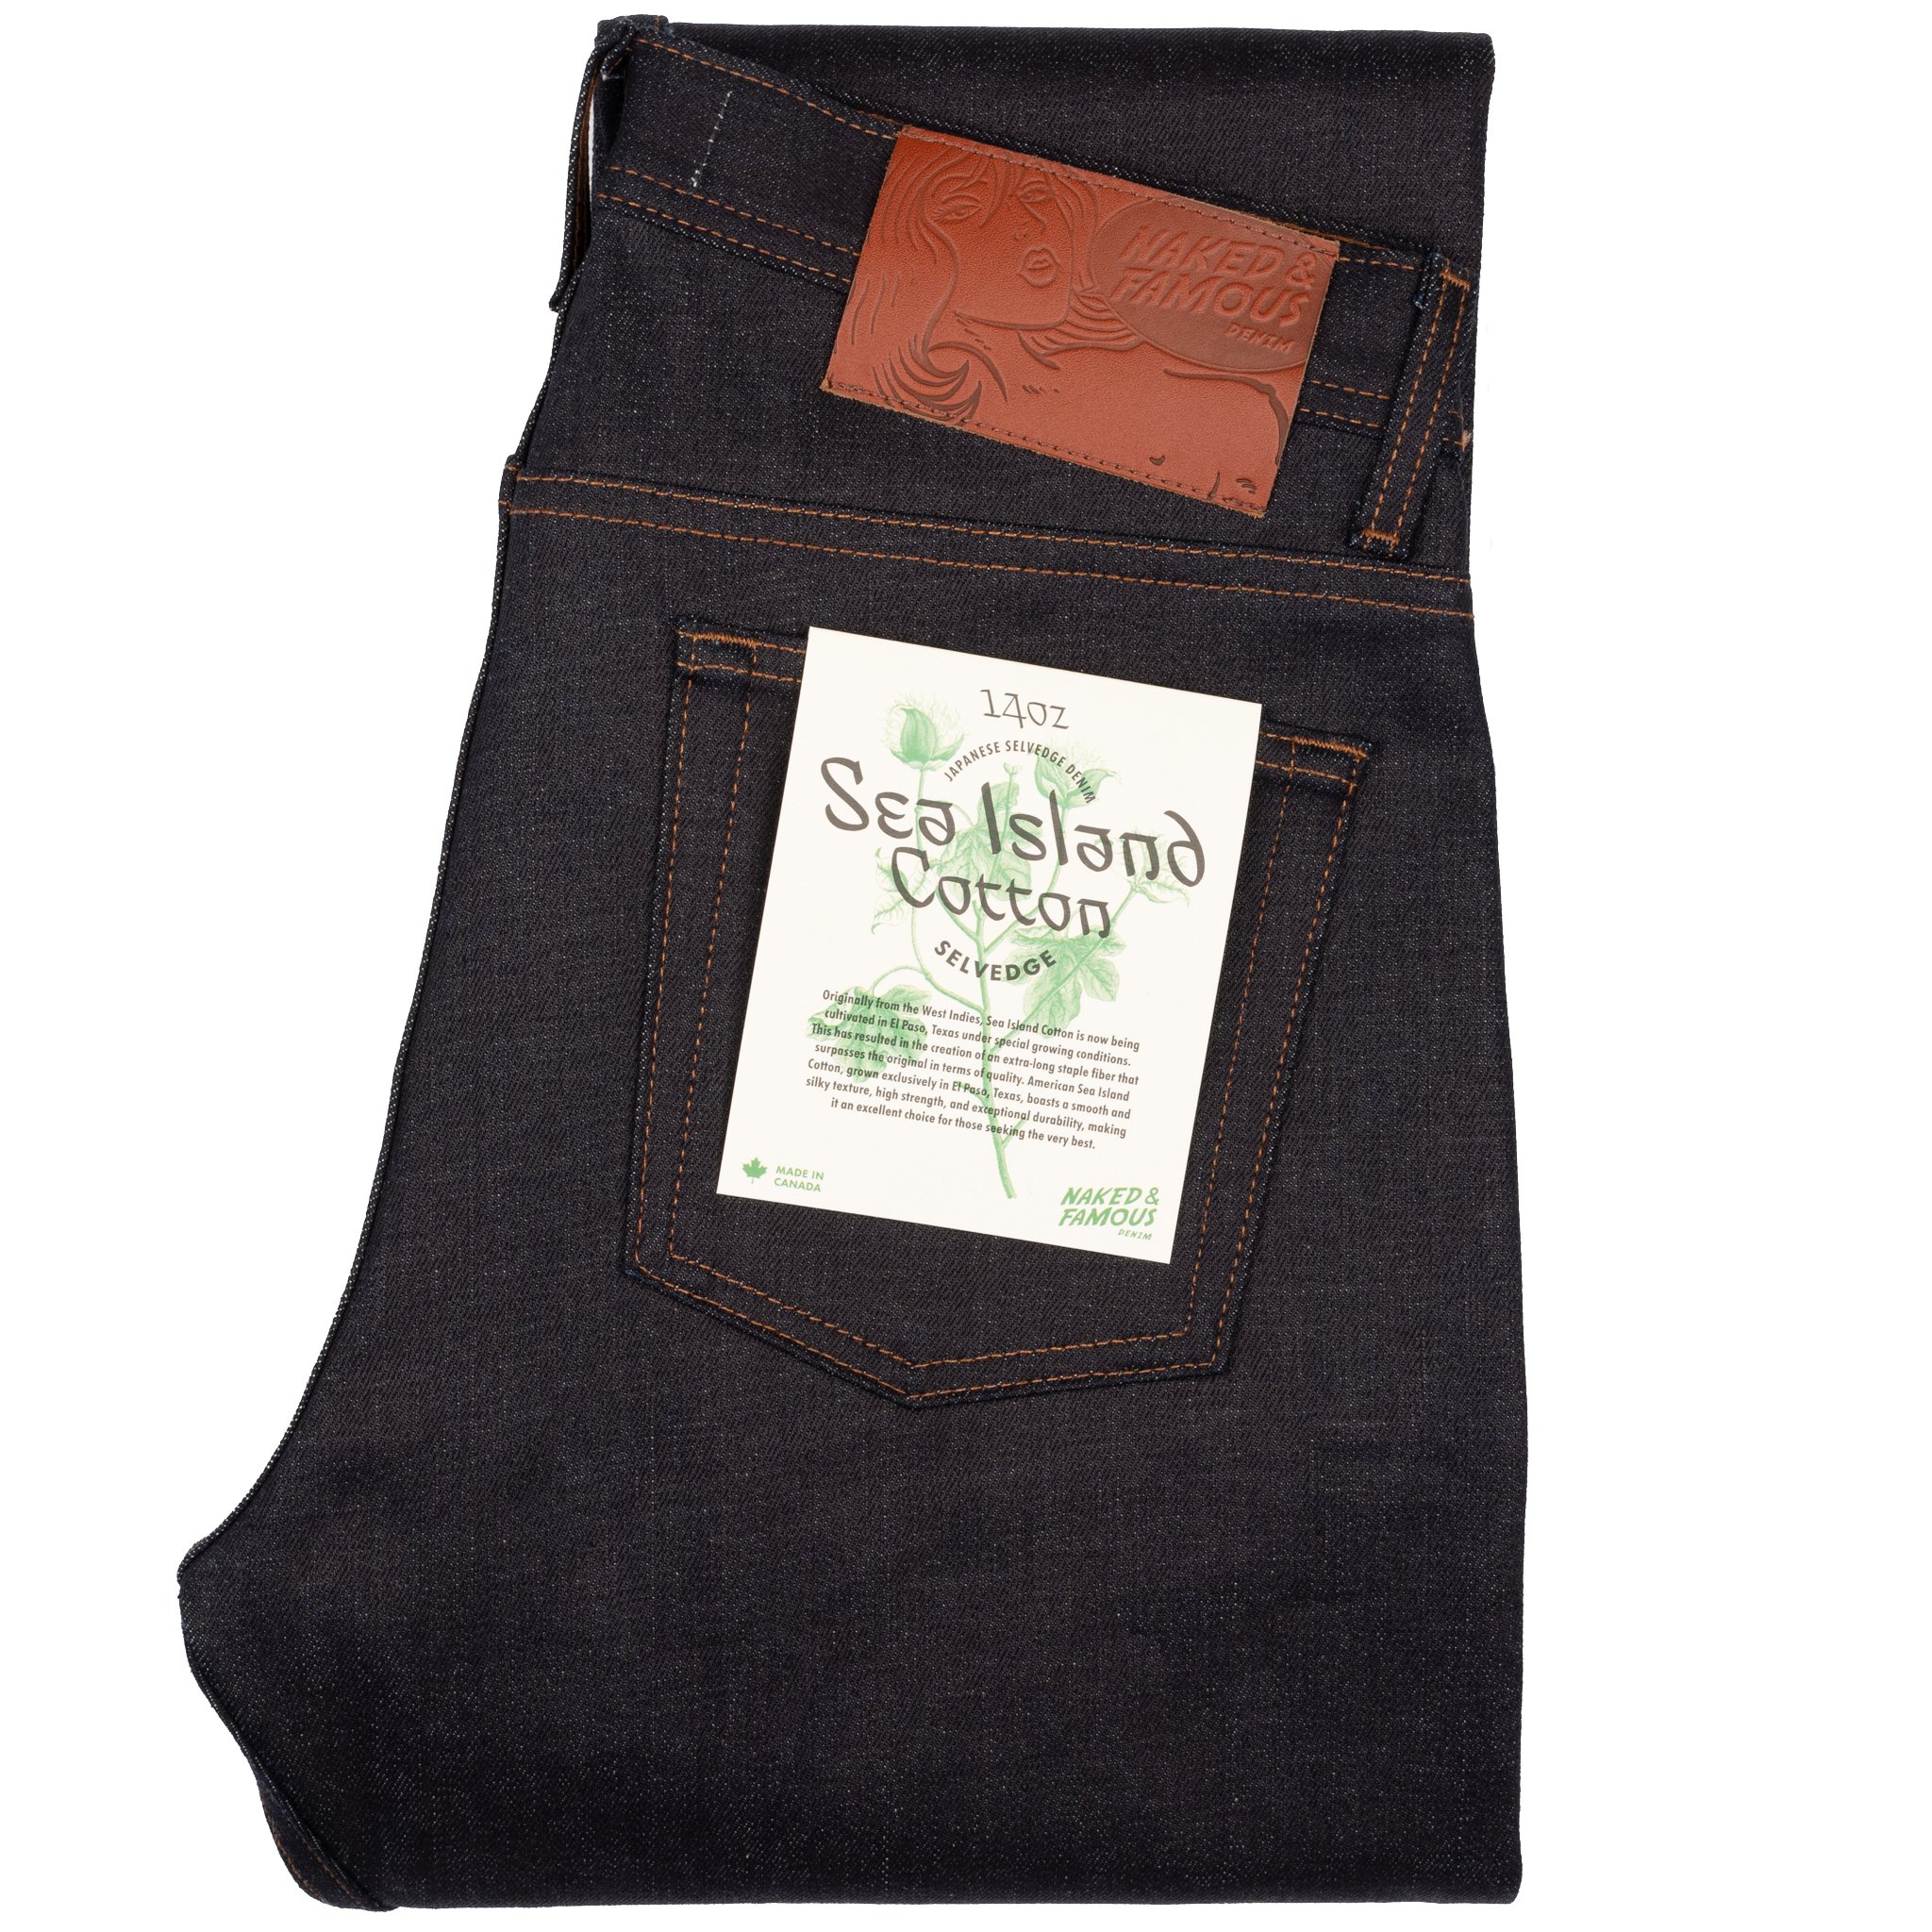  Sea Island Cotton Selvedge - Jeans 